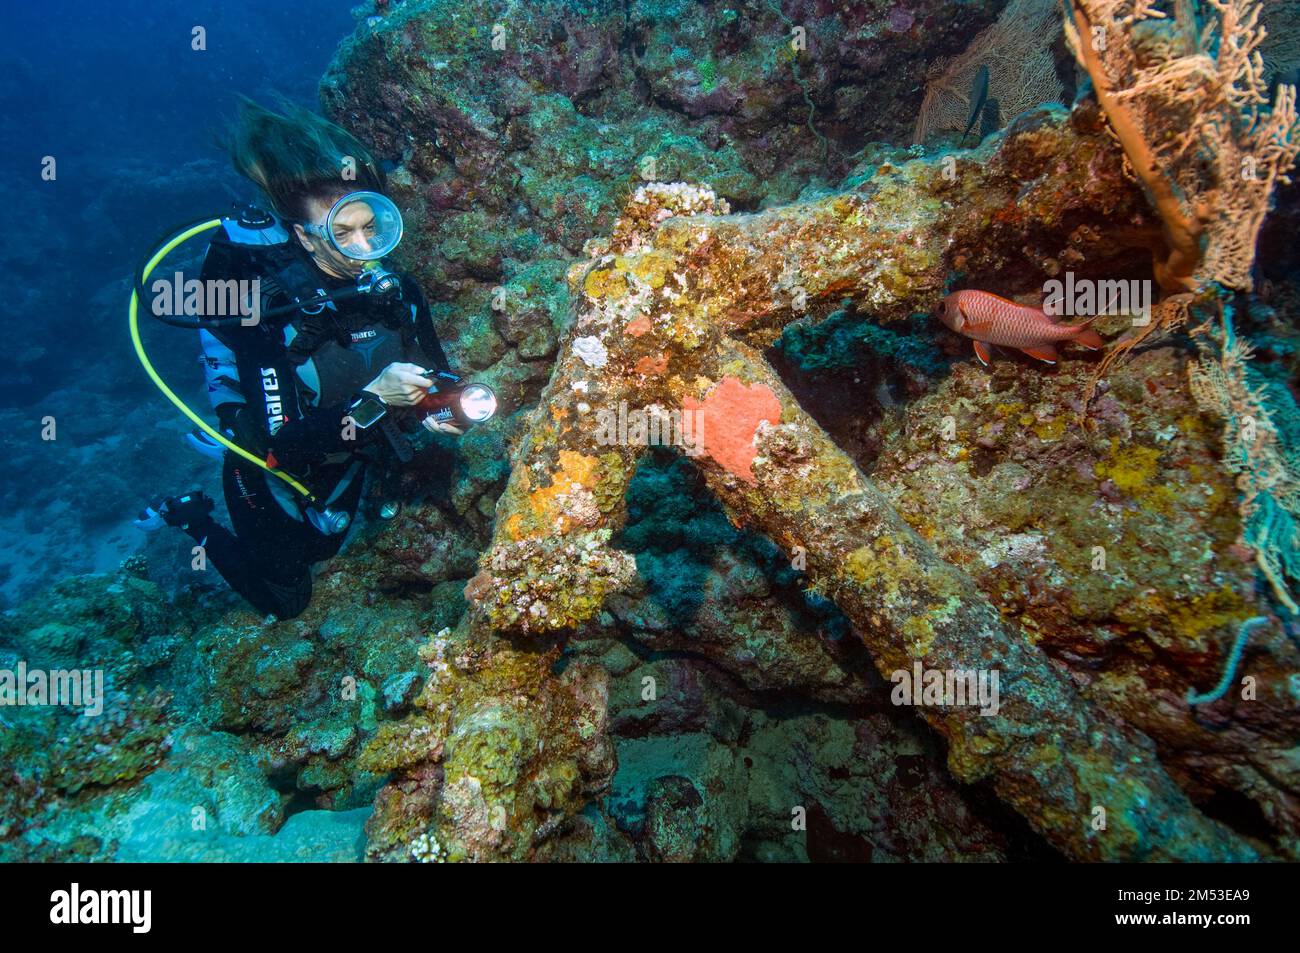 Taucherin taucht an historischer alter Anker Stockanker, Indischer Ozean, Mauritius, Afrika Stock Photo